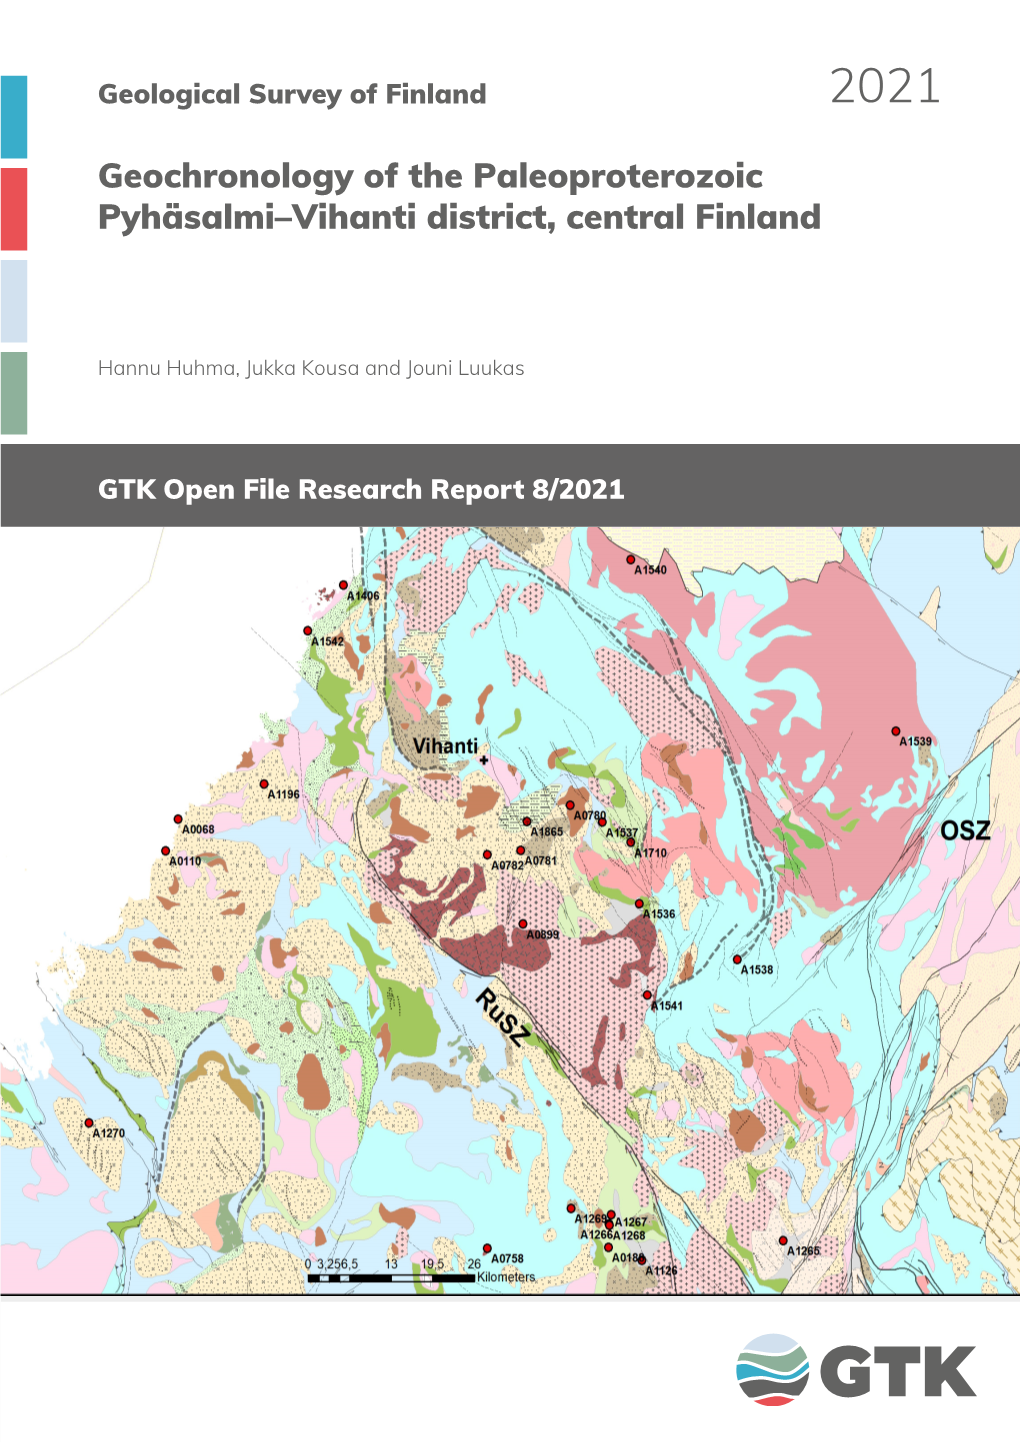 GTK Open File Research Report 8/2021. Geochronology of the Paleoproterozoic Pyhäsalmi–Vihanti District, Central Finland